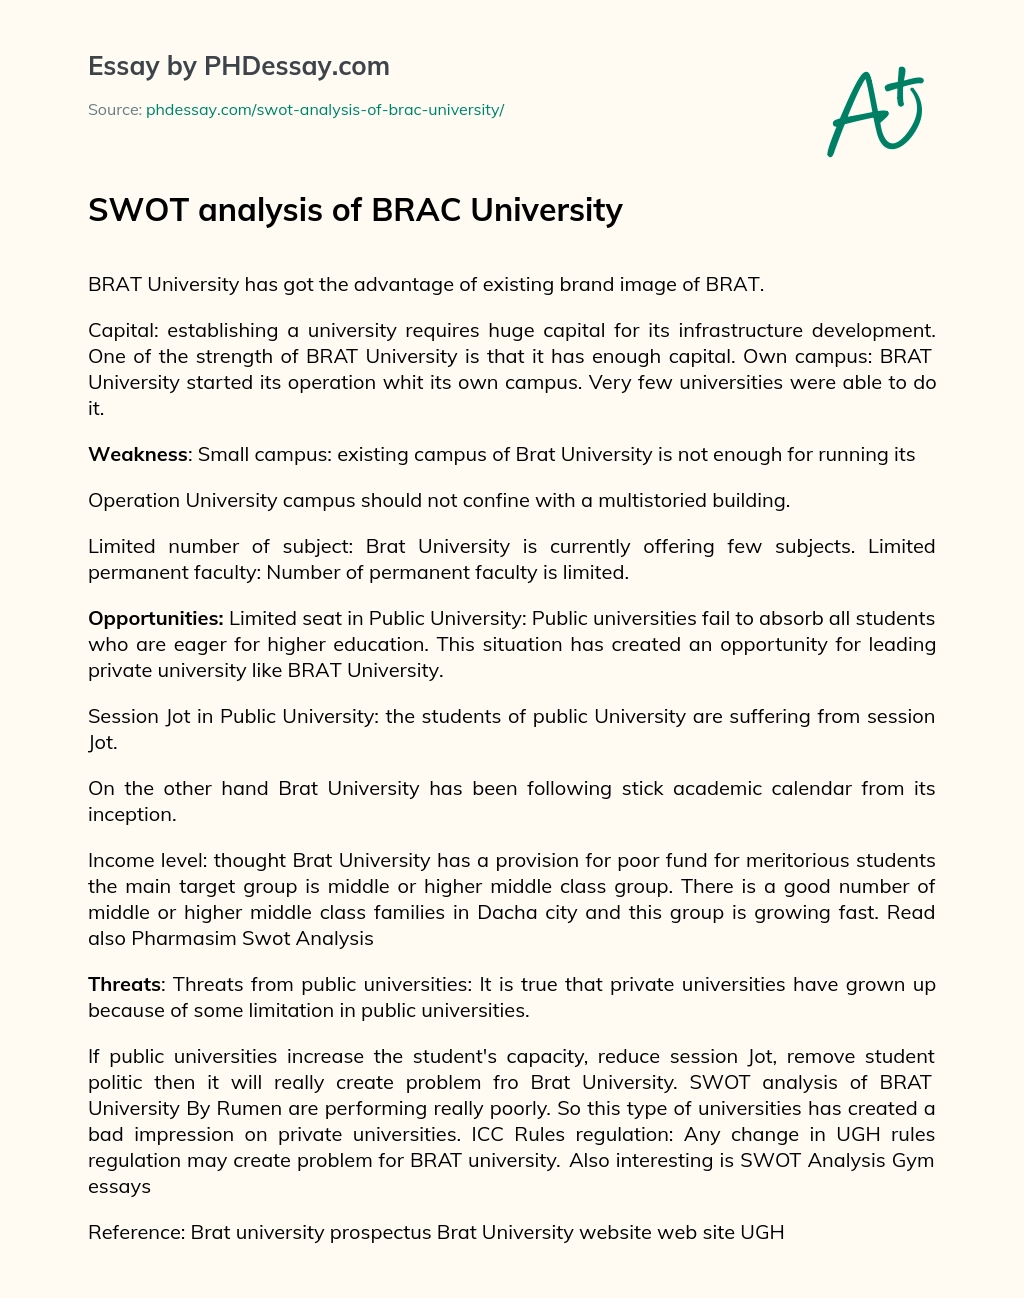 SWOT analysis of BRAC University essay